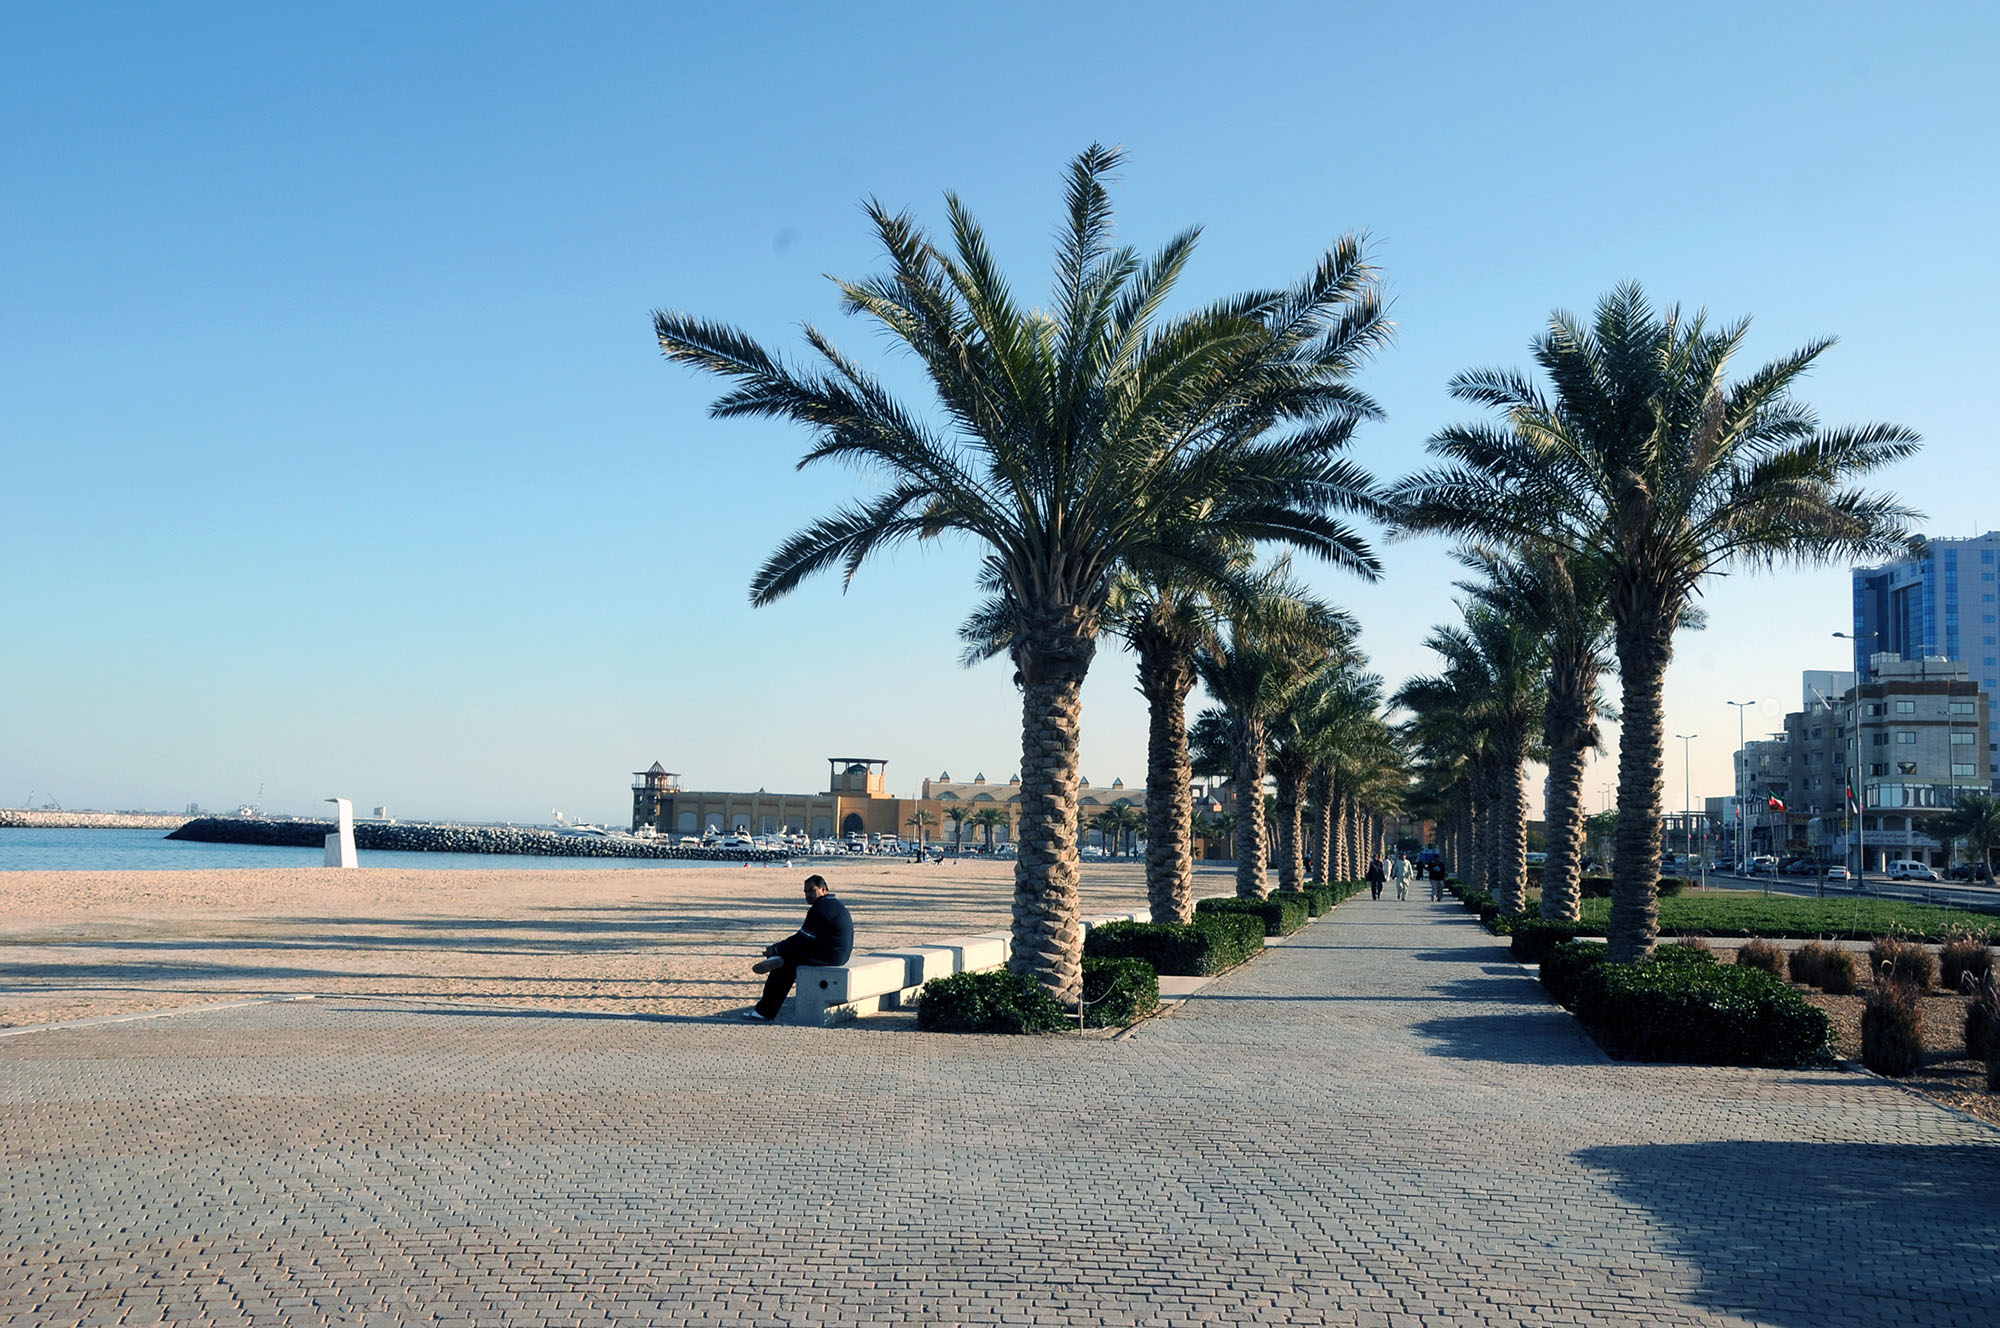 Fahaheel Water Front Promenade